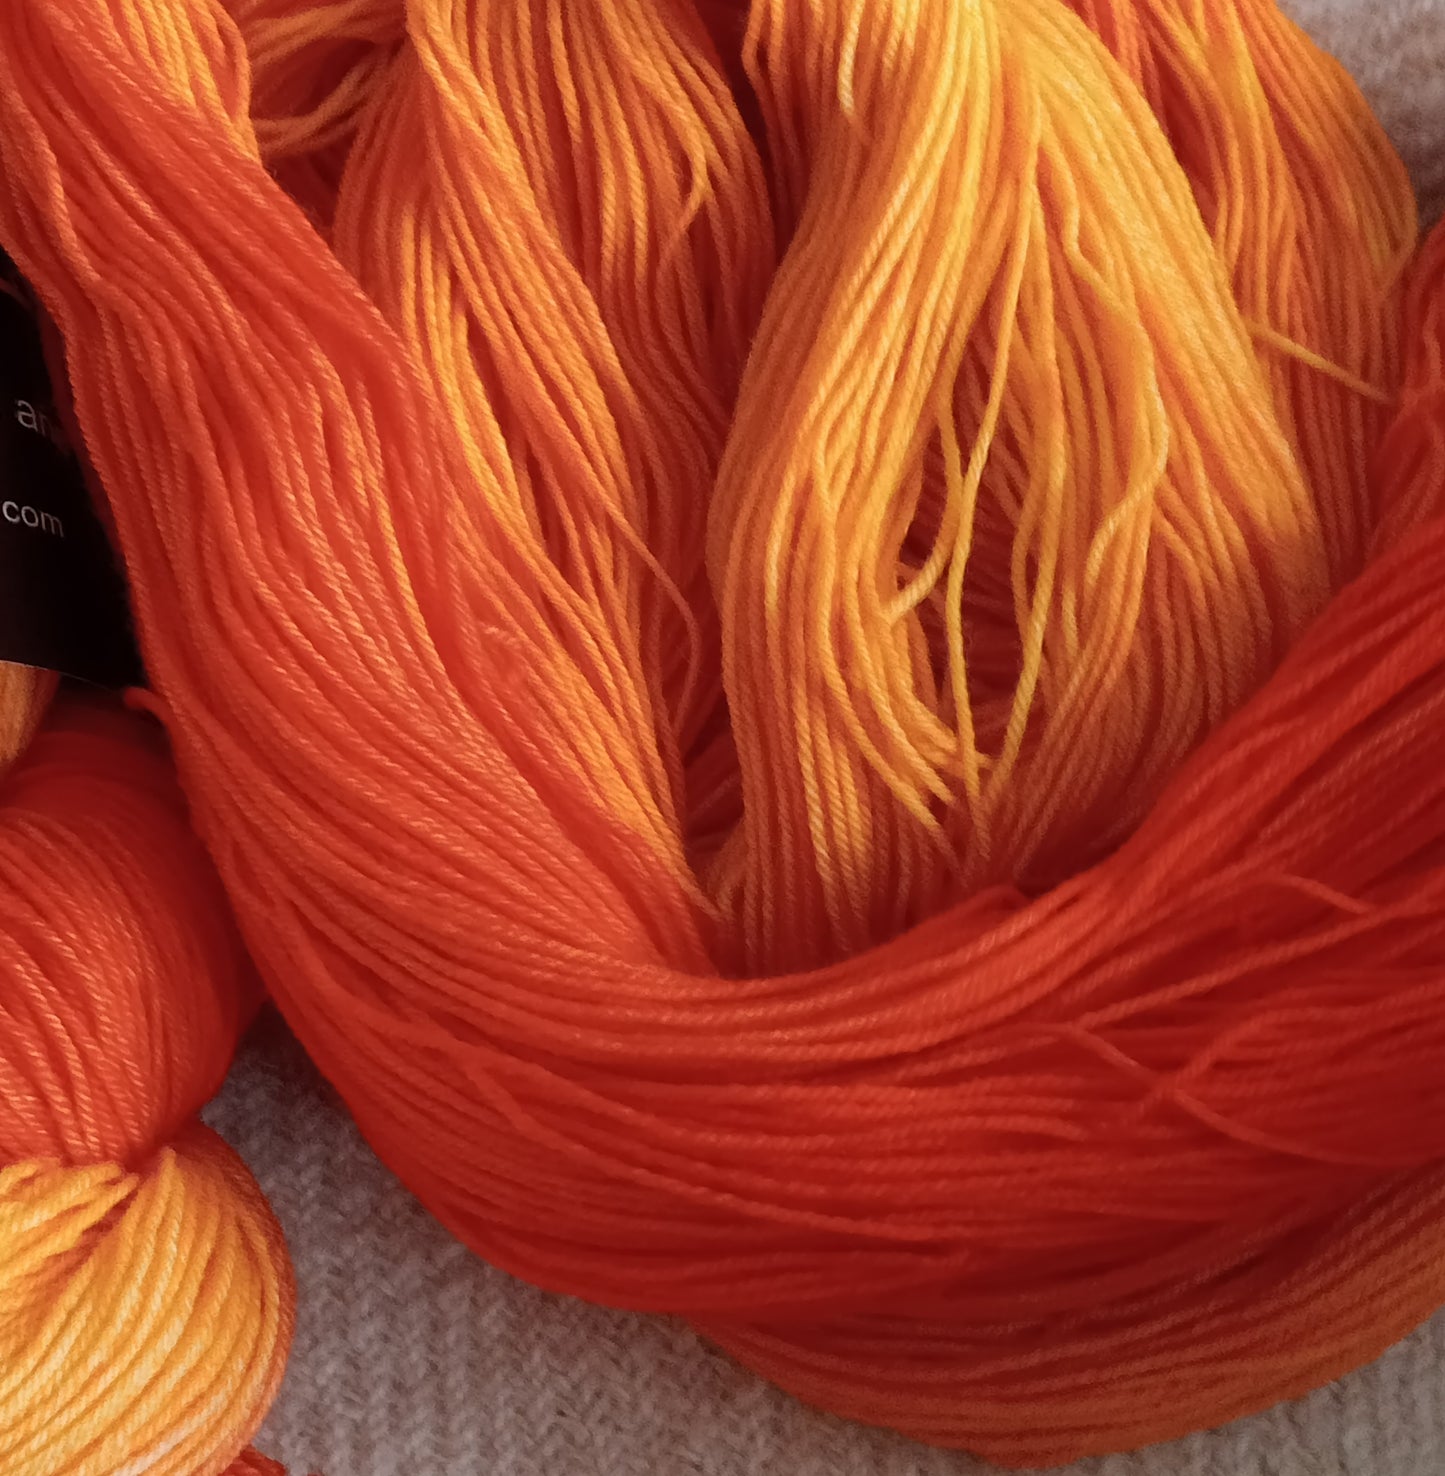 100G Merino/nylon hand dyed  Sock Yarn 4 Ply- "Tequilla Sunrise" - **SALE END OF STOCK**